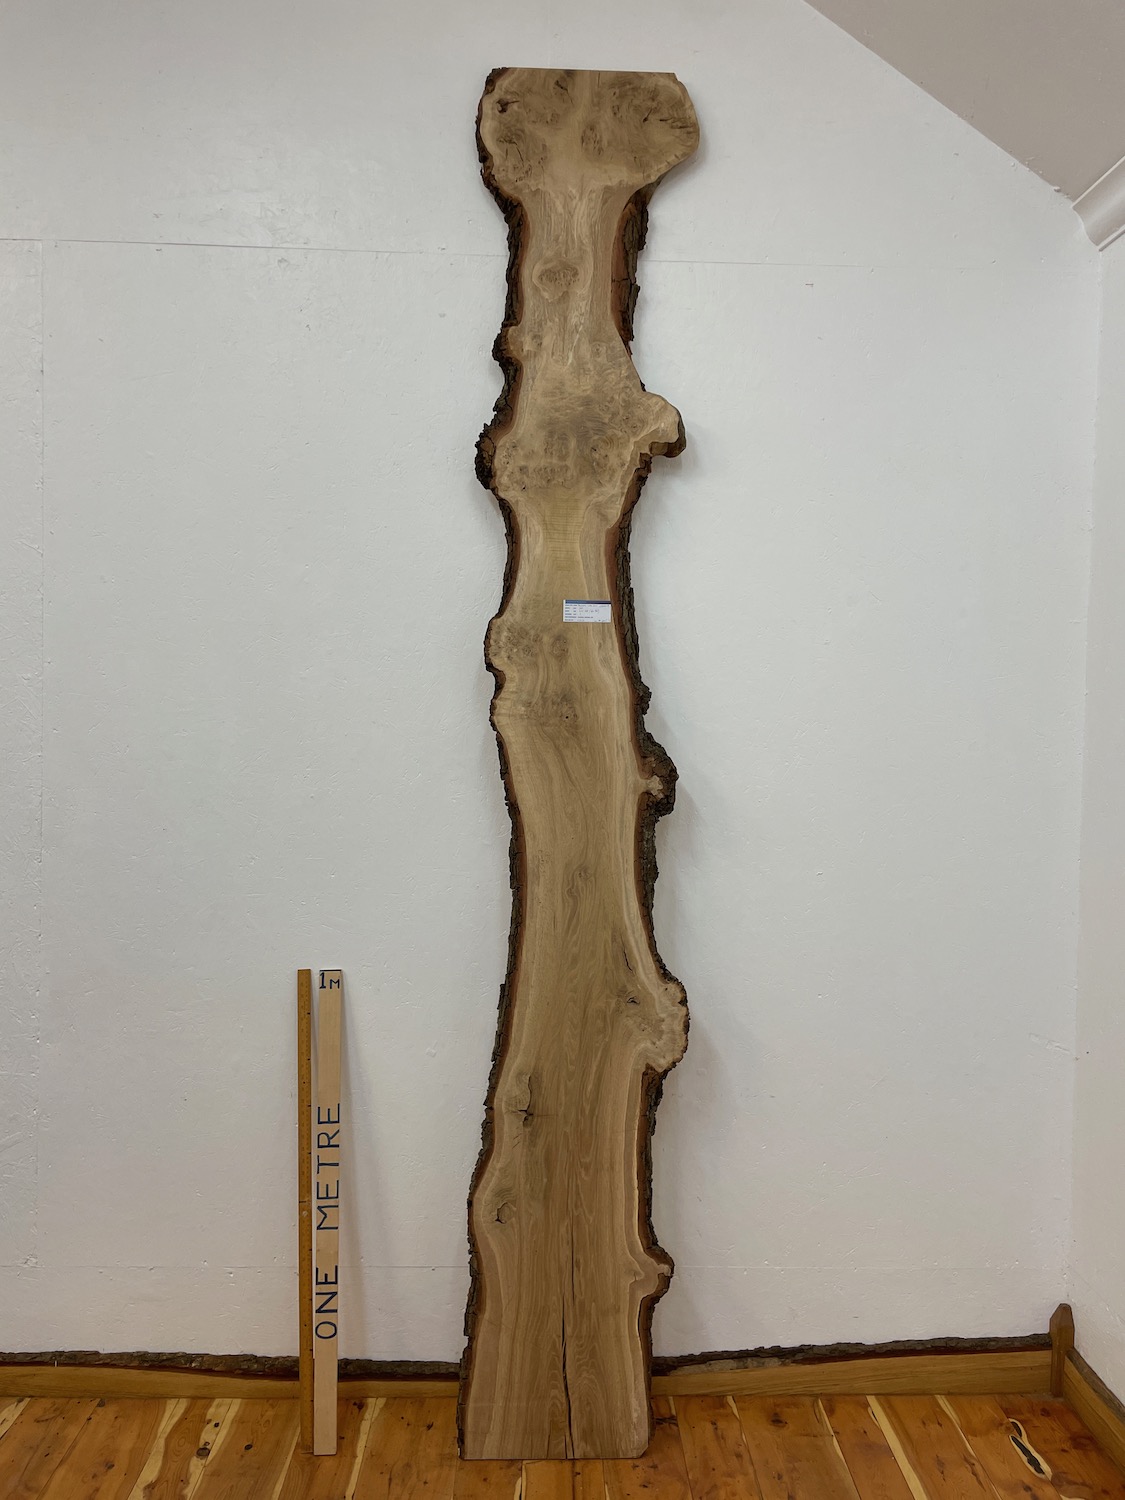 BURRY OAK Natural Waney Edge Slab Wood Timber Board 1559A-7 Thickness 3cm Kiln Dried Planed & Thicknessed Seasoned Hardwood Wildwood Wallart